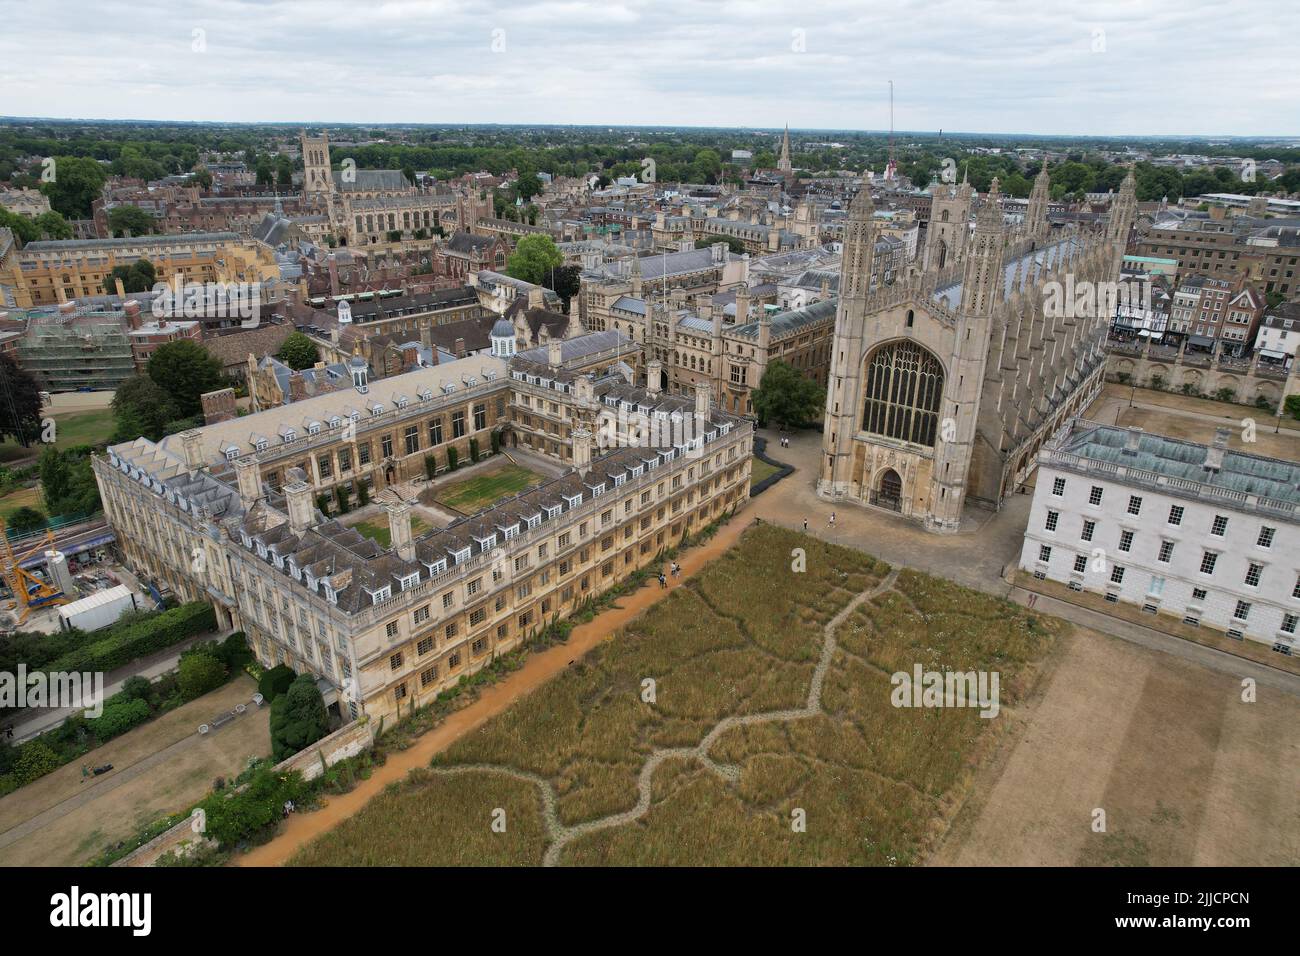 King's College Chapel Cambridge City centre UK drone aerial view heatwave summer 2022 Stock Photo